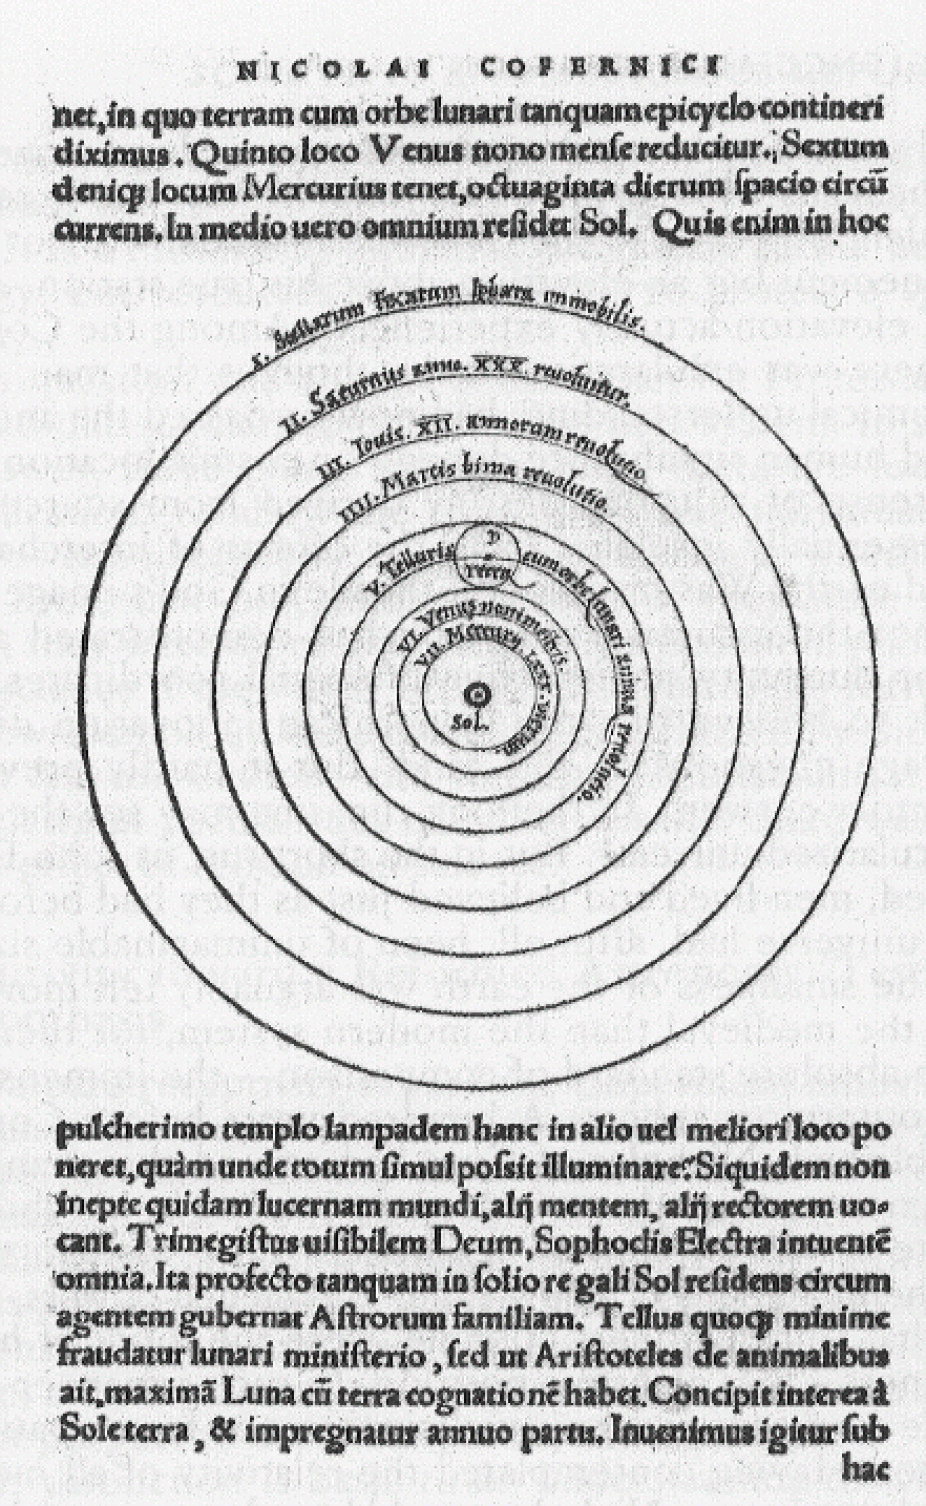 The Copernican Planetary Model